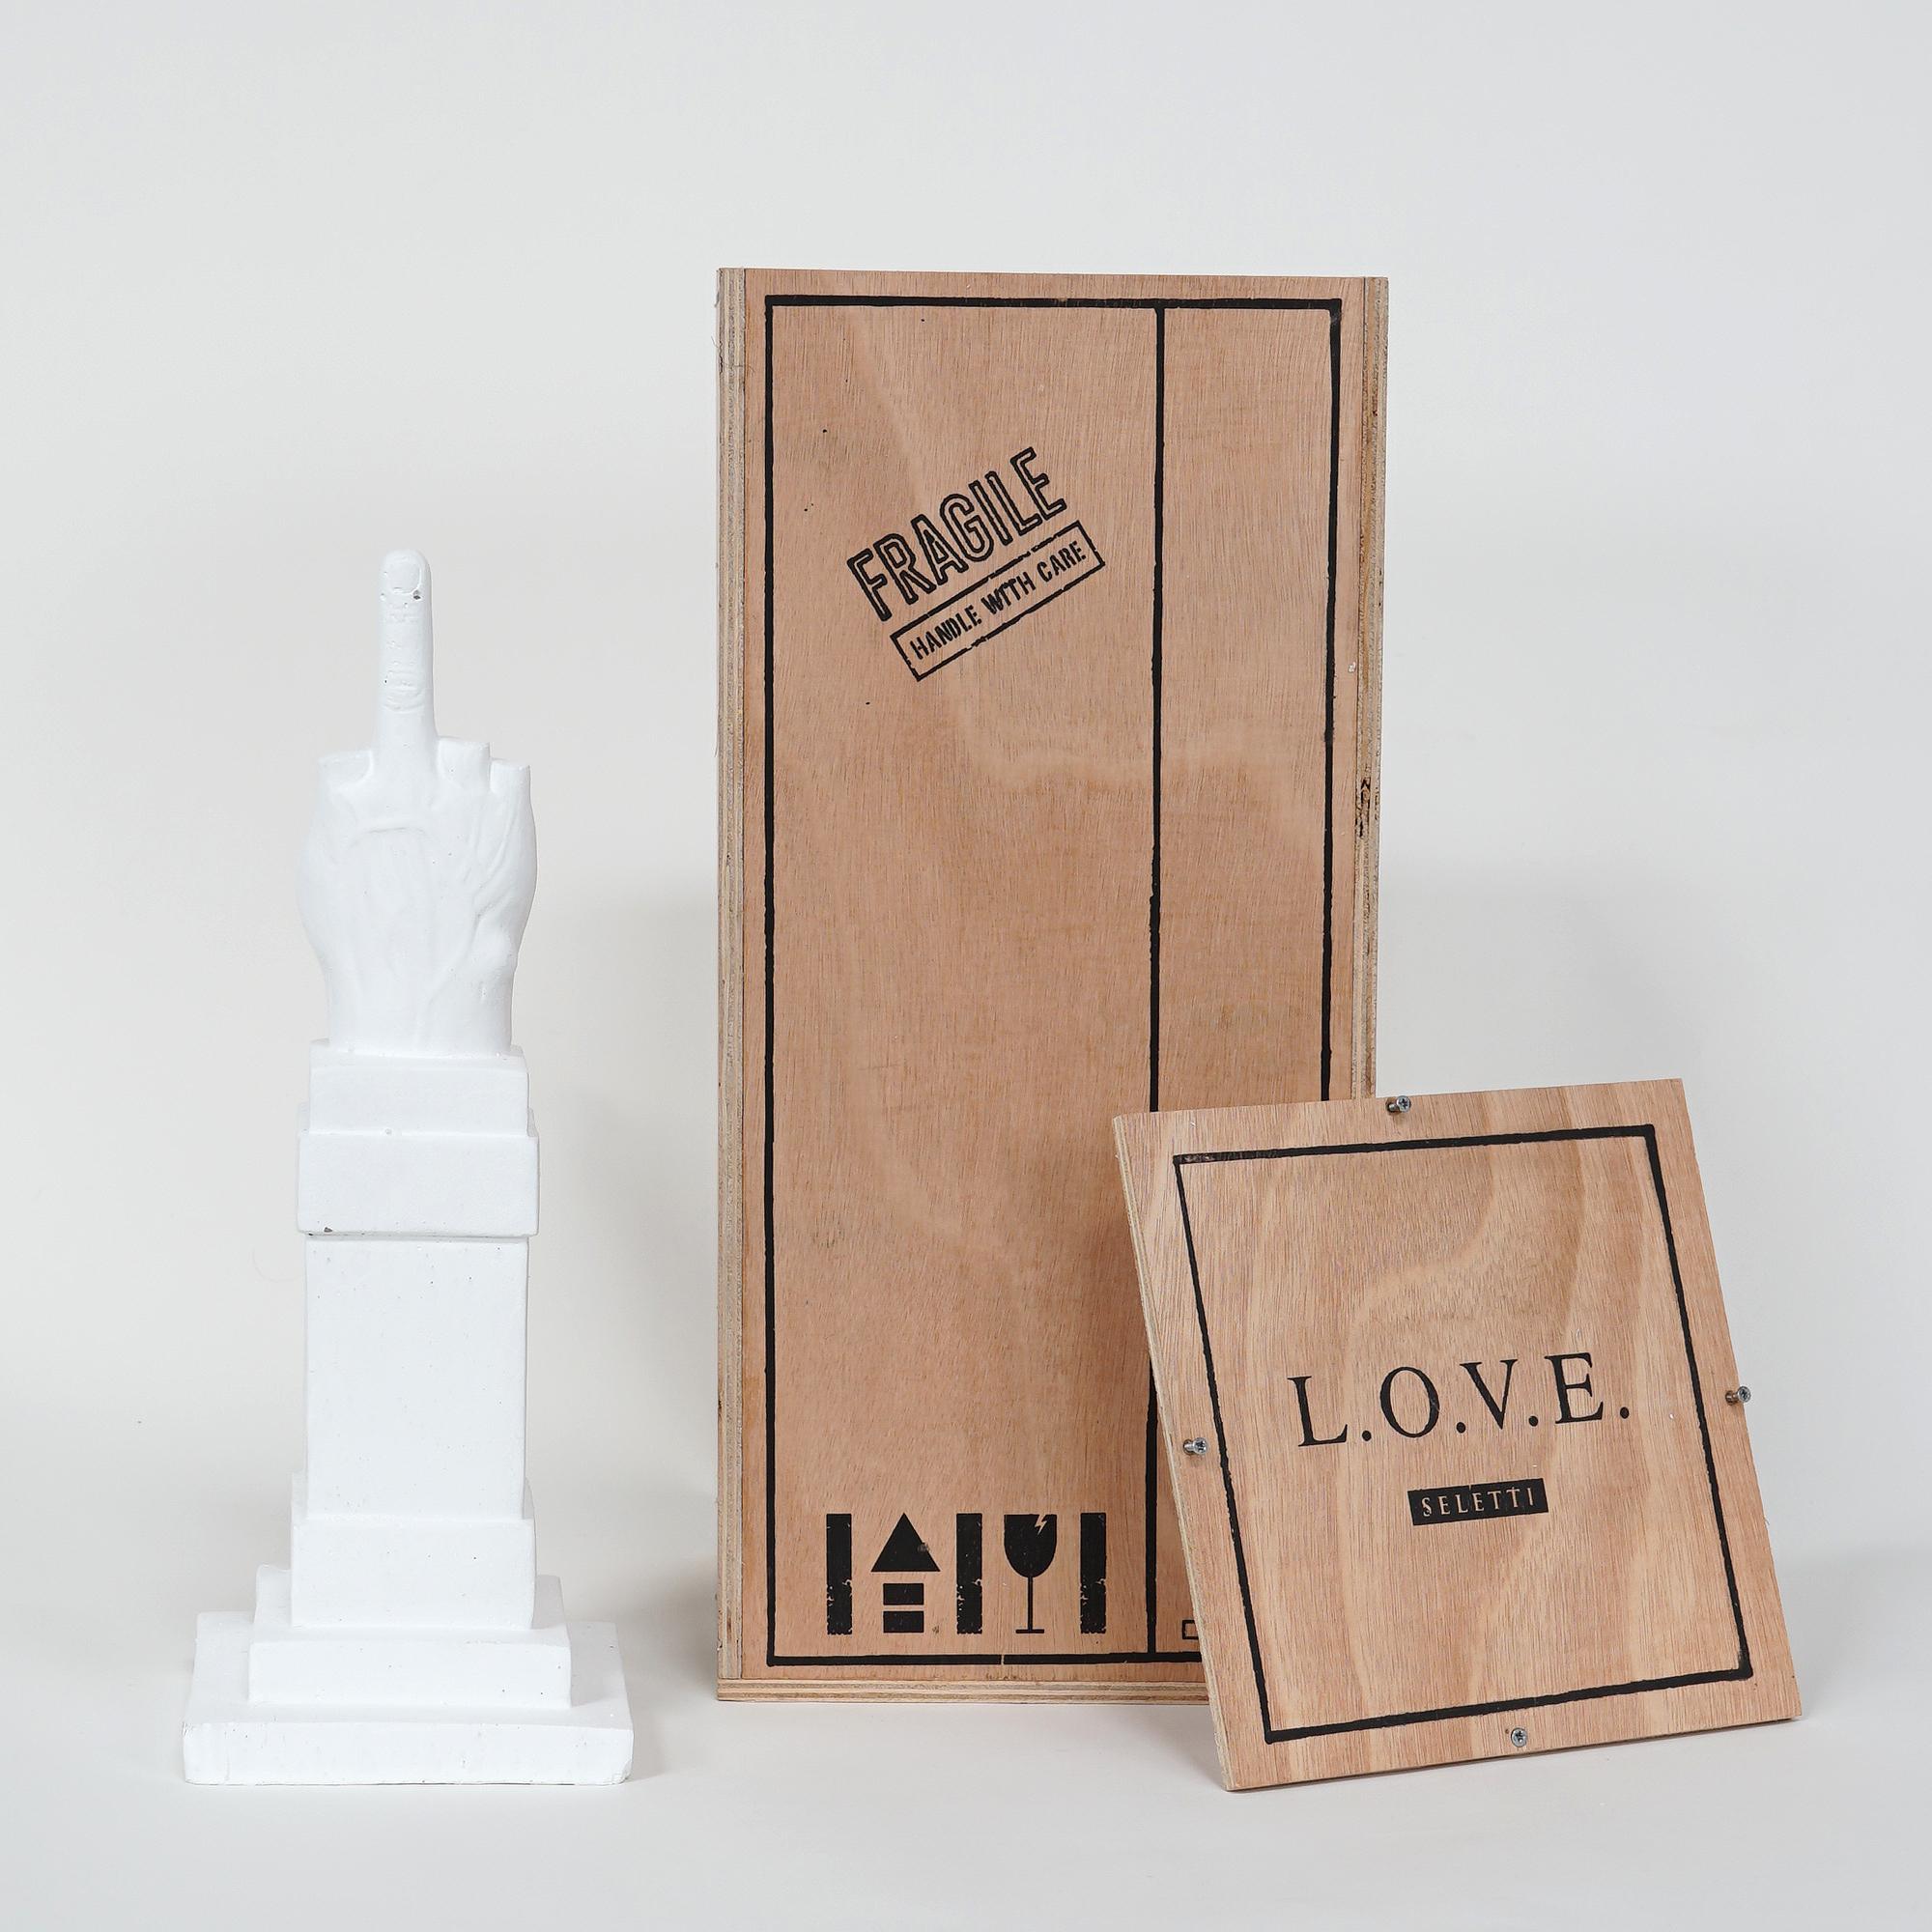 Maurizio Cattelan L.O.V.E. (White) Concrete sculpture Art Limited Edition For Sale 2